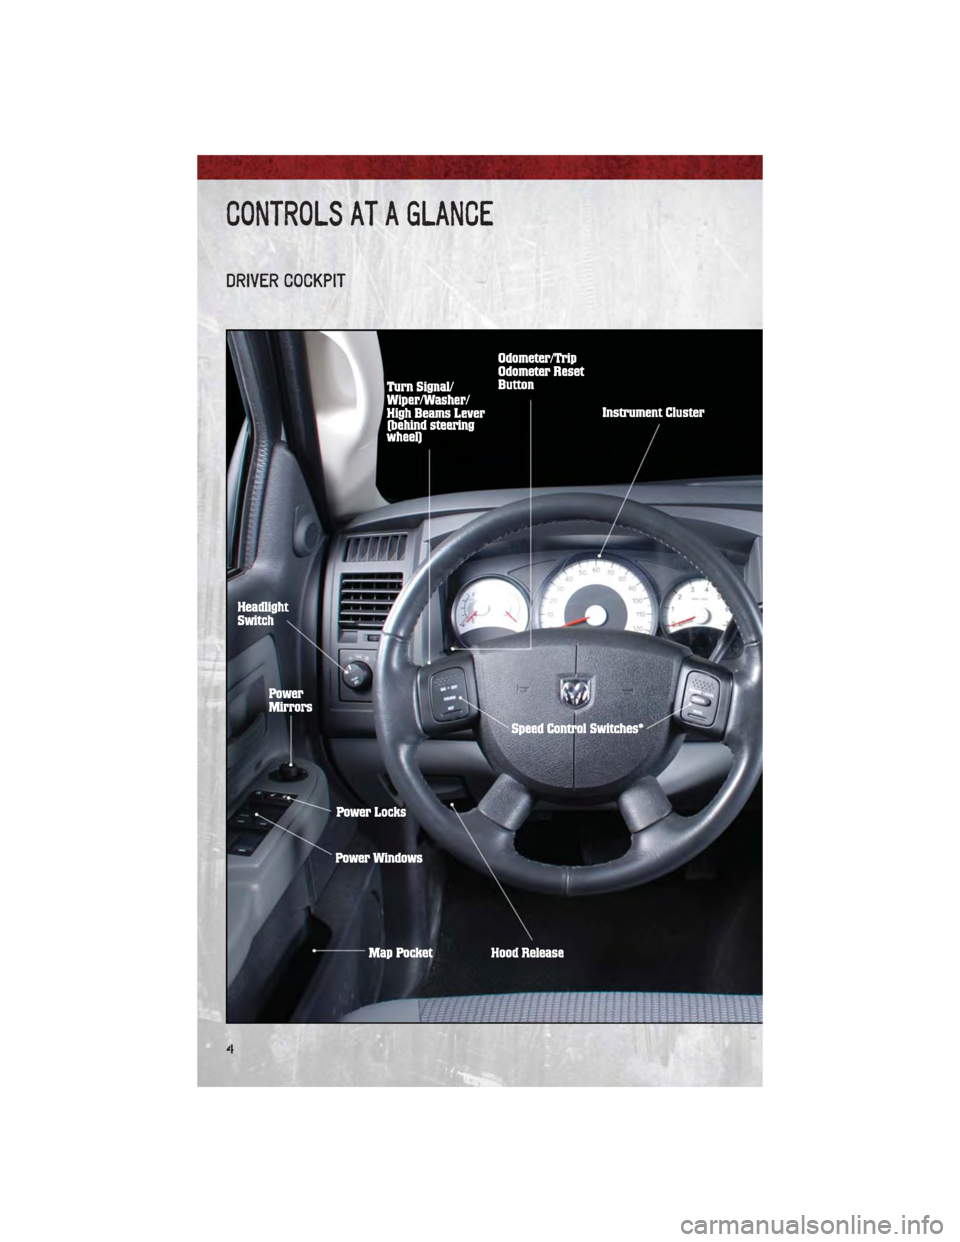 DODGE DAKOTA 2011 3.G User Guide DRIVER COCKPIT
CONTROLS AT A GLANCE
4 